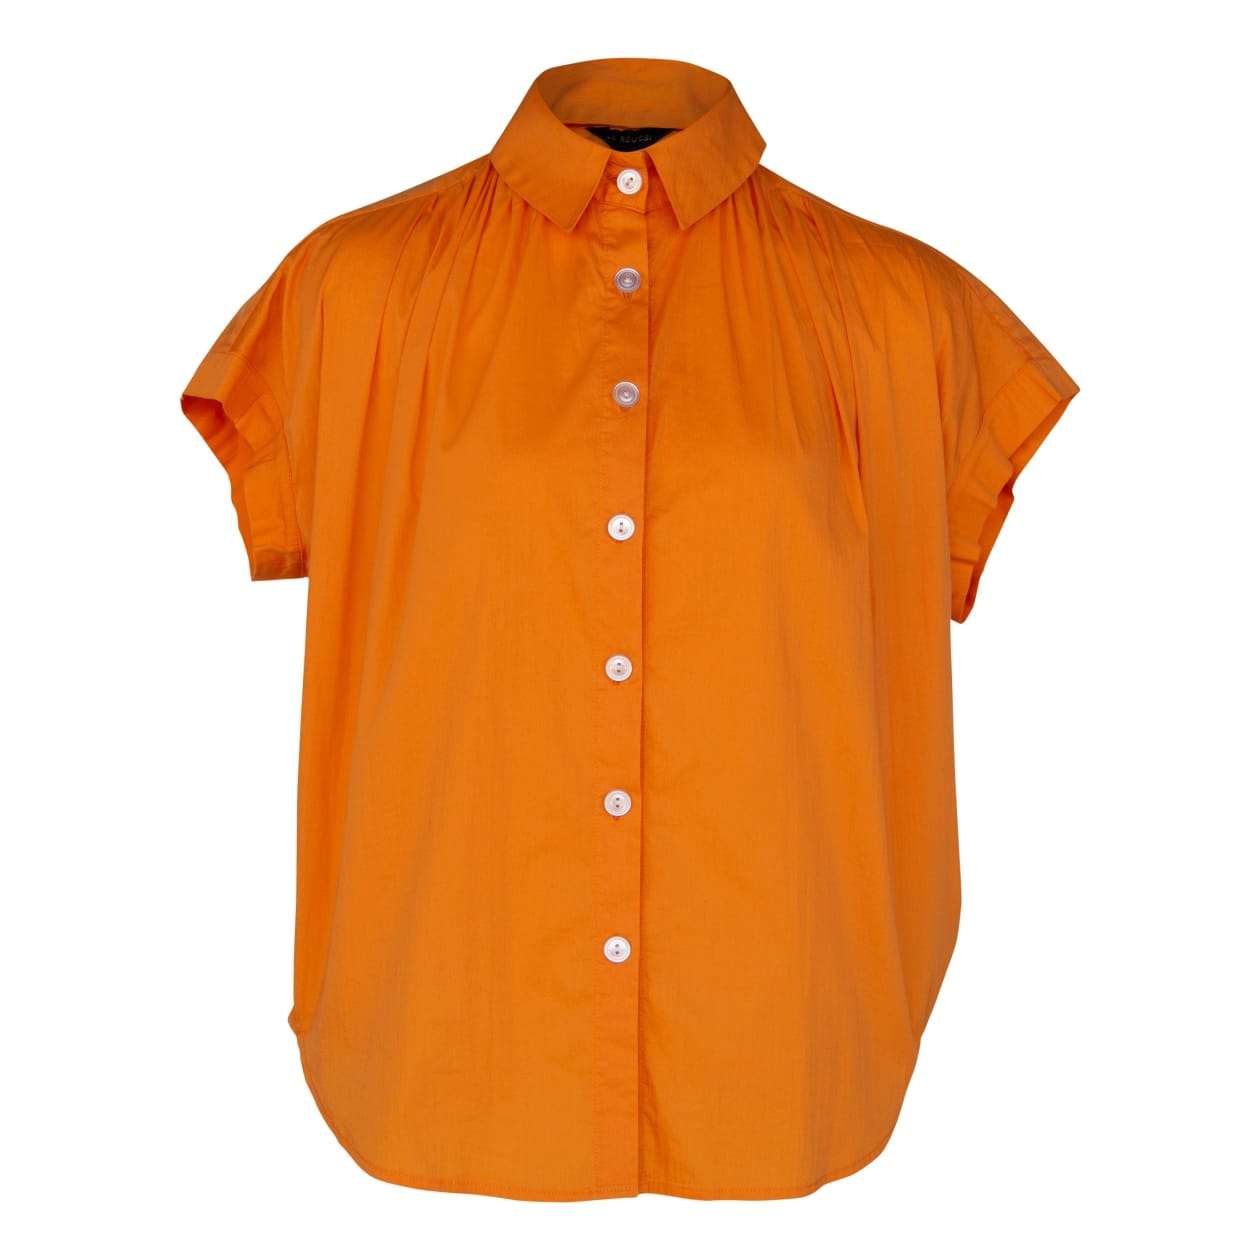 Women's Gather Collar Shirt in Orange